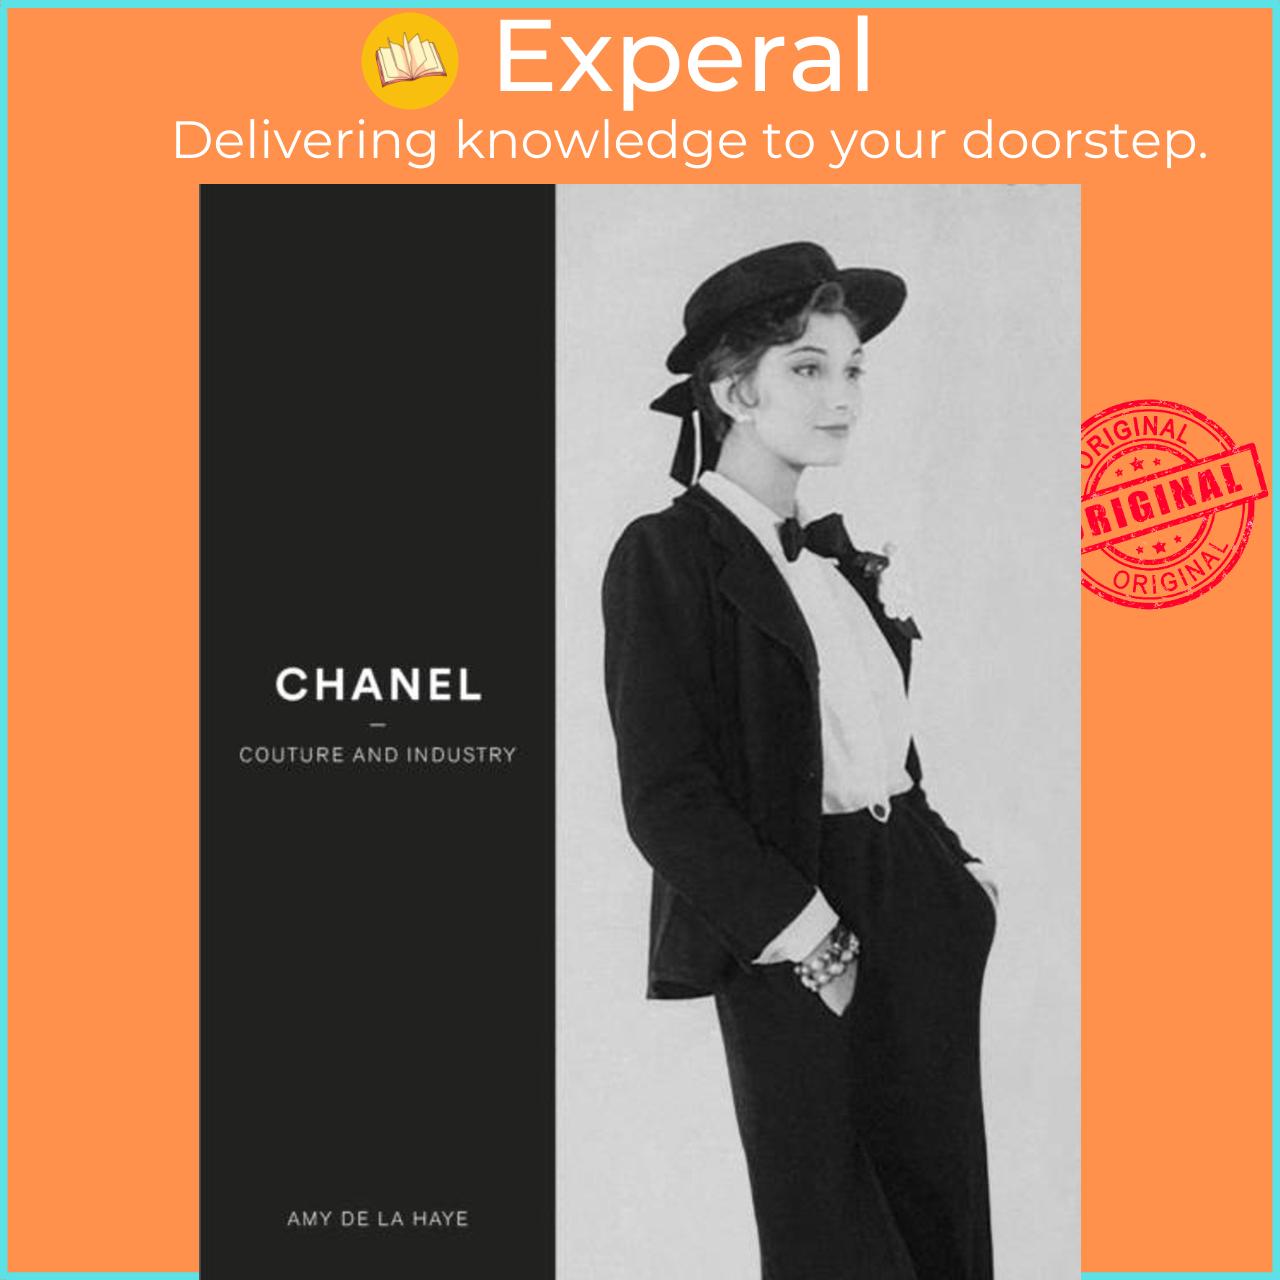 Sách - Chanel by Amy de la Haye (UK edition, hardcover)